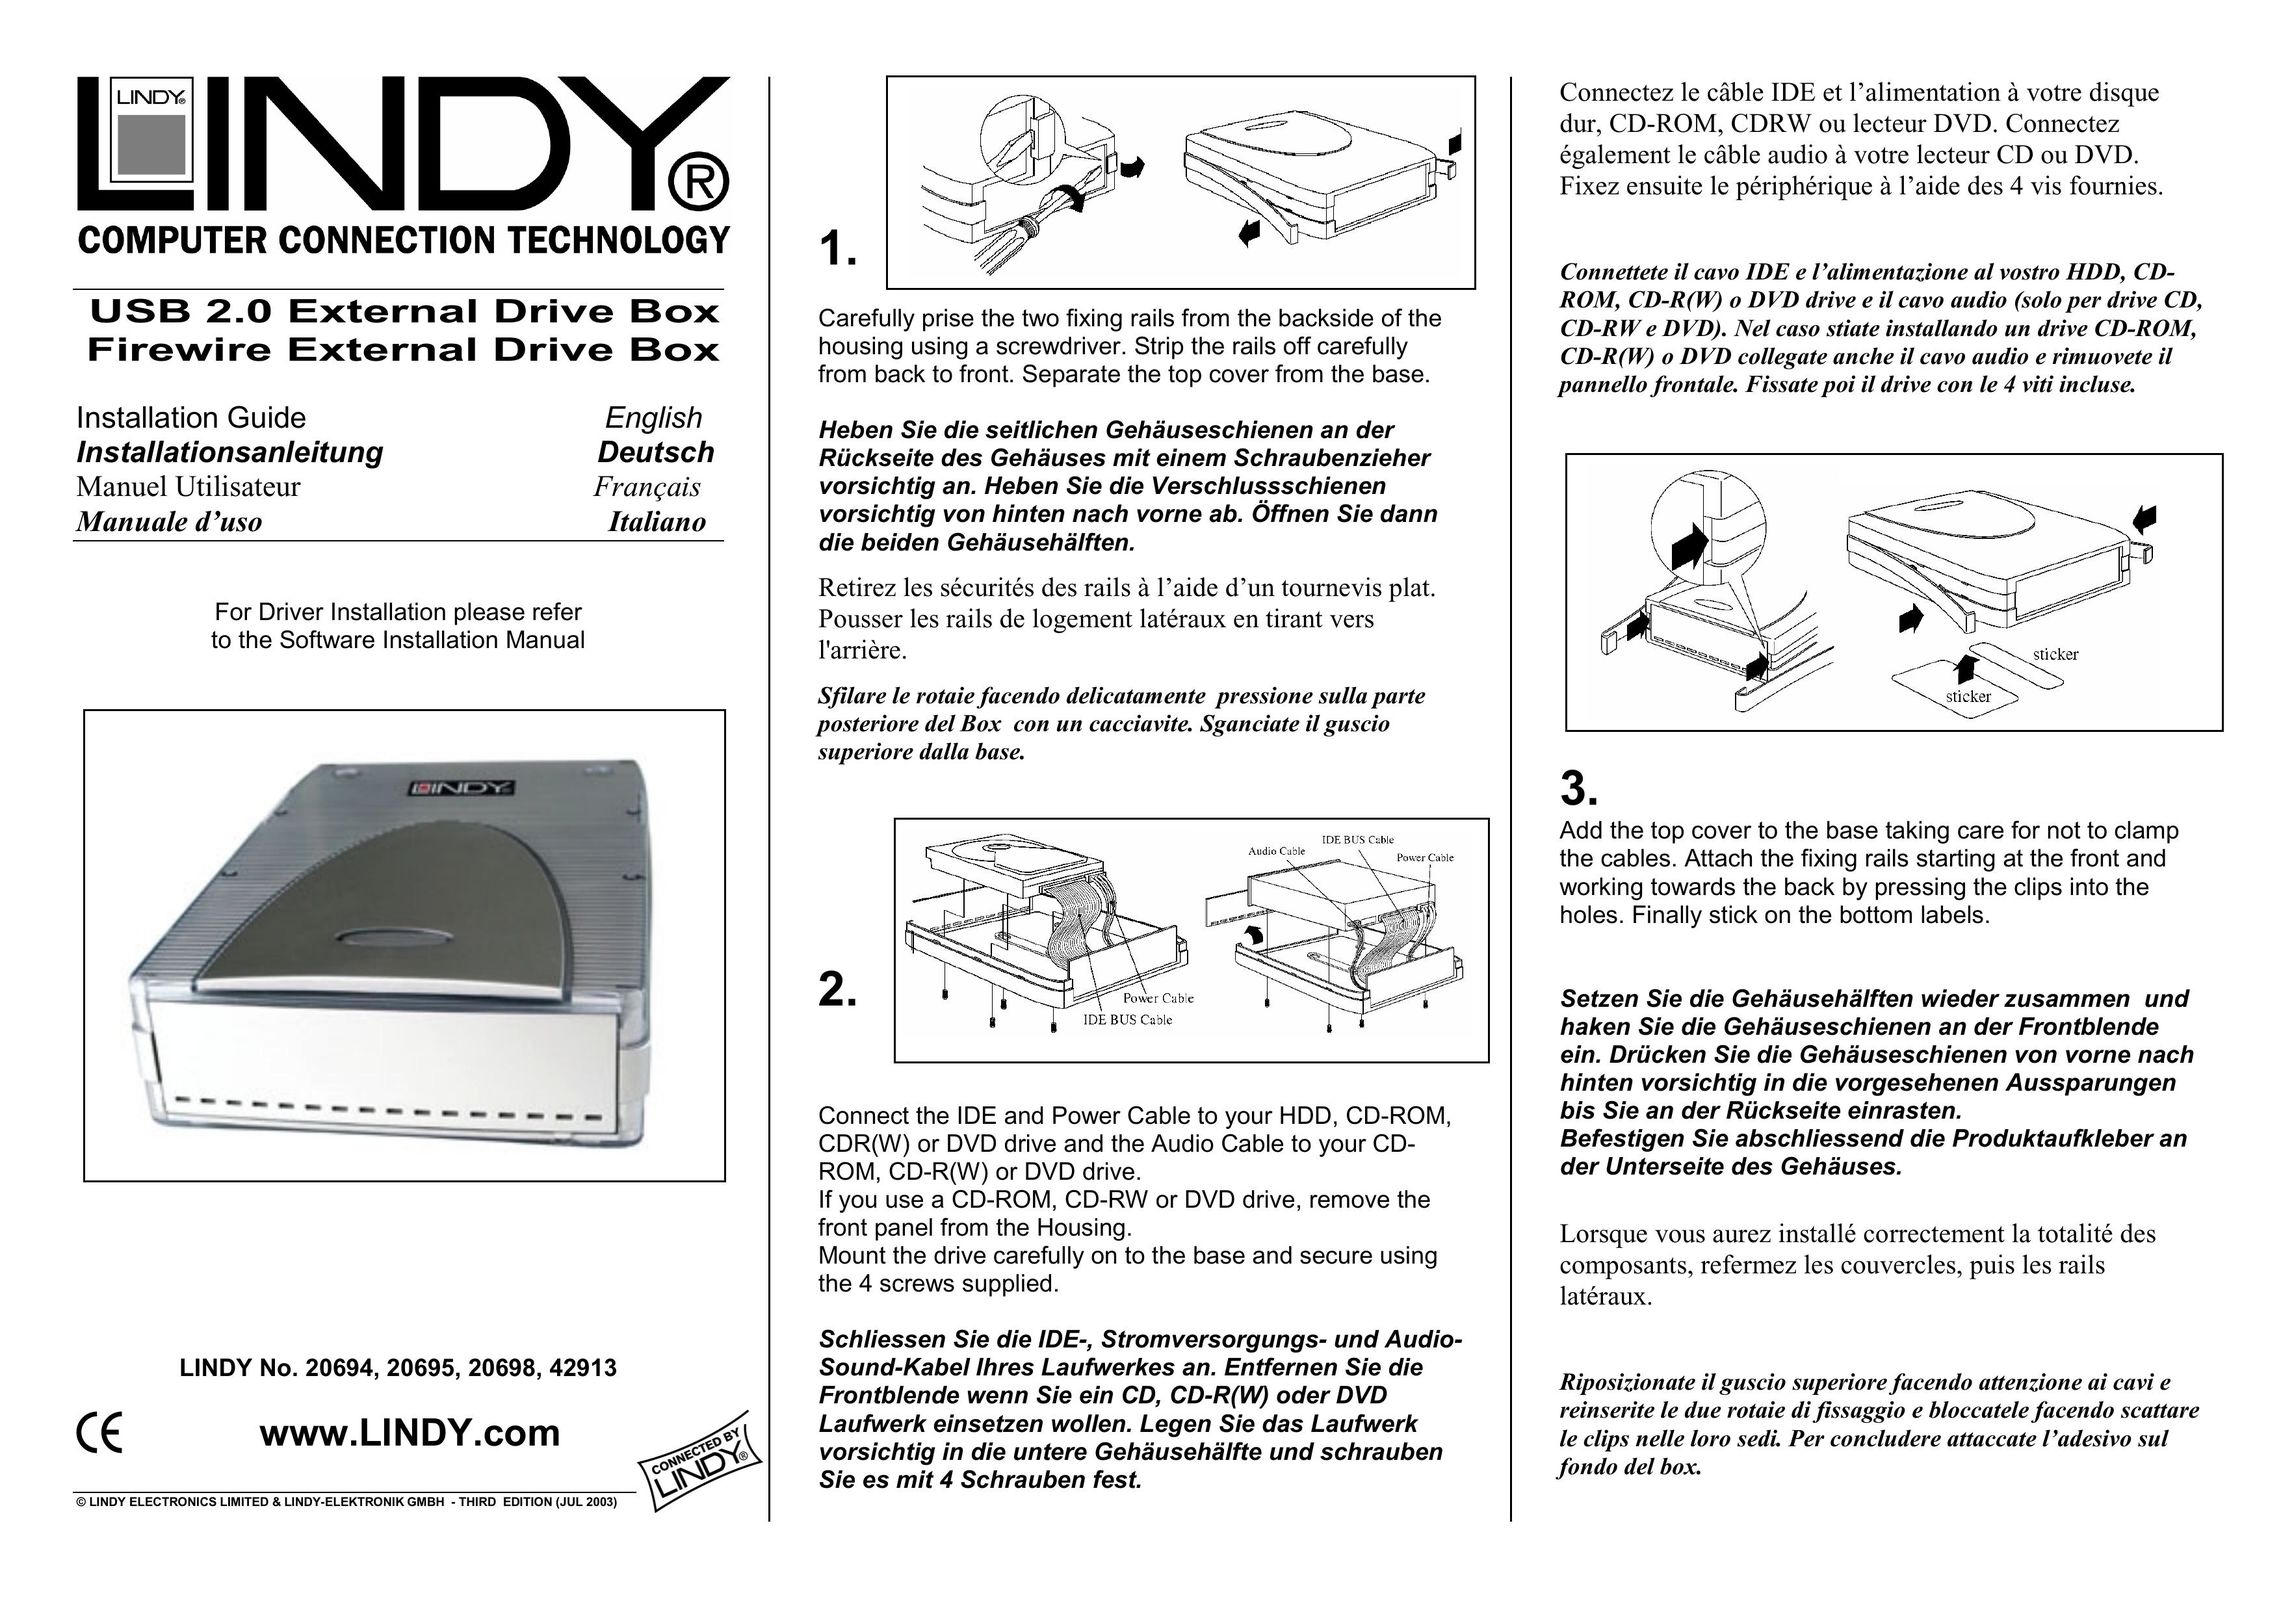 Lindy 20698 Computer Drive User Manual